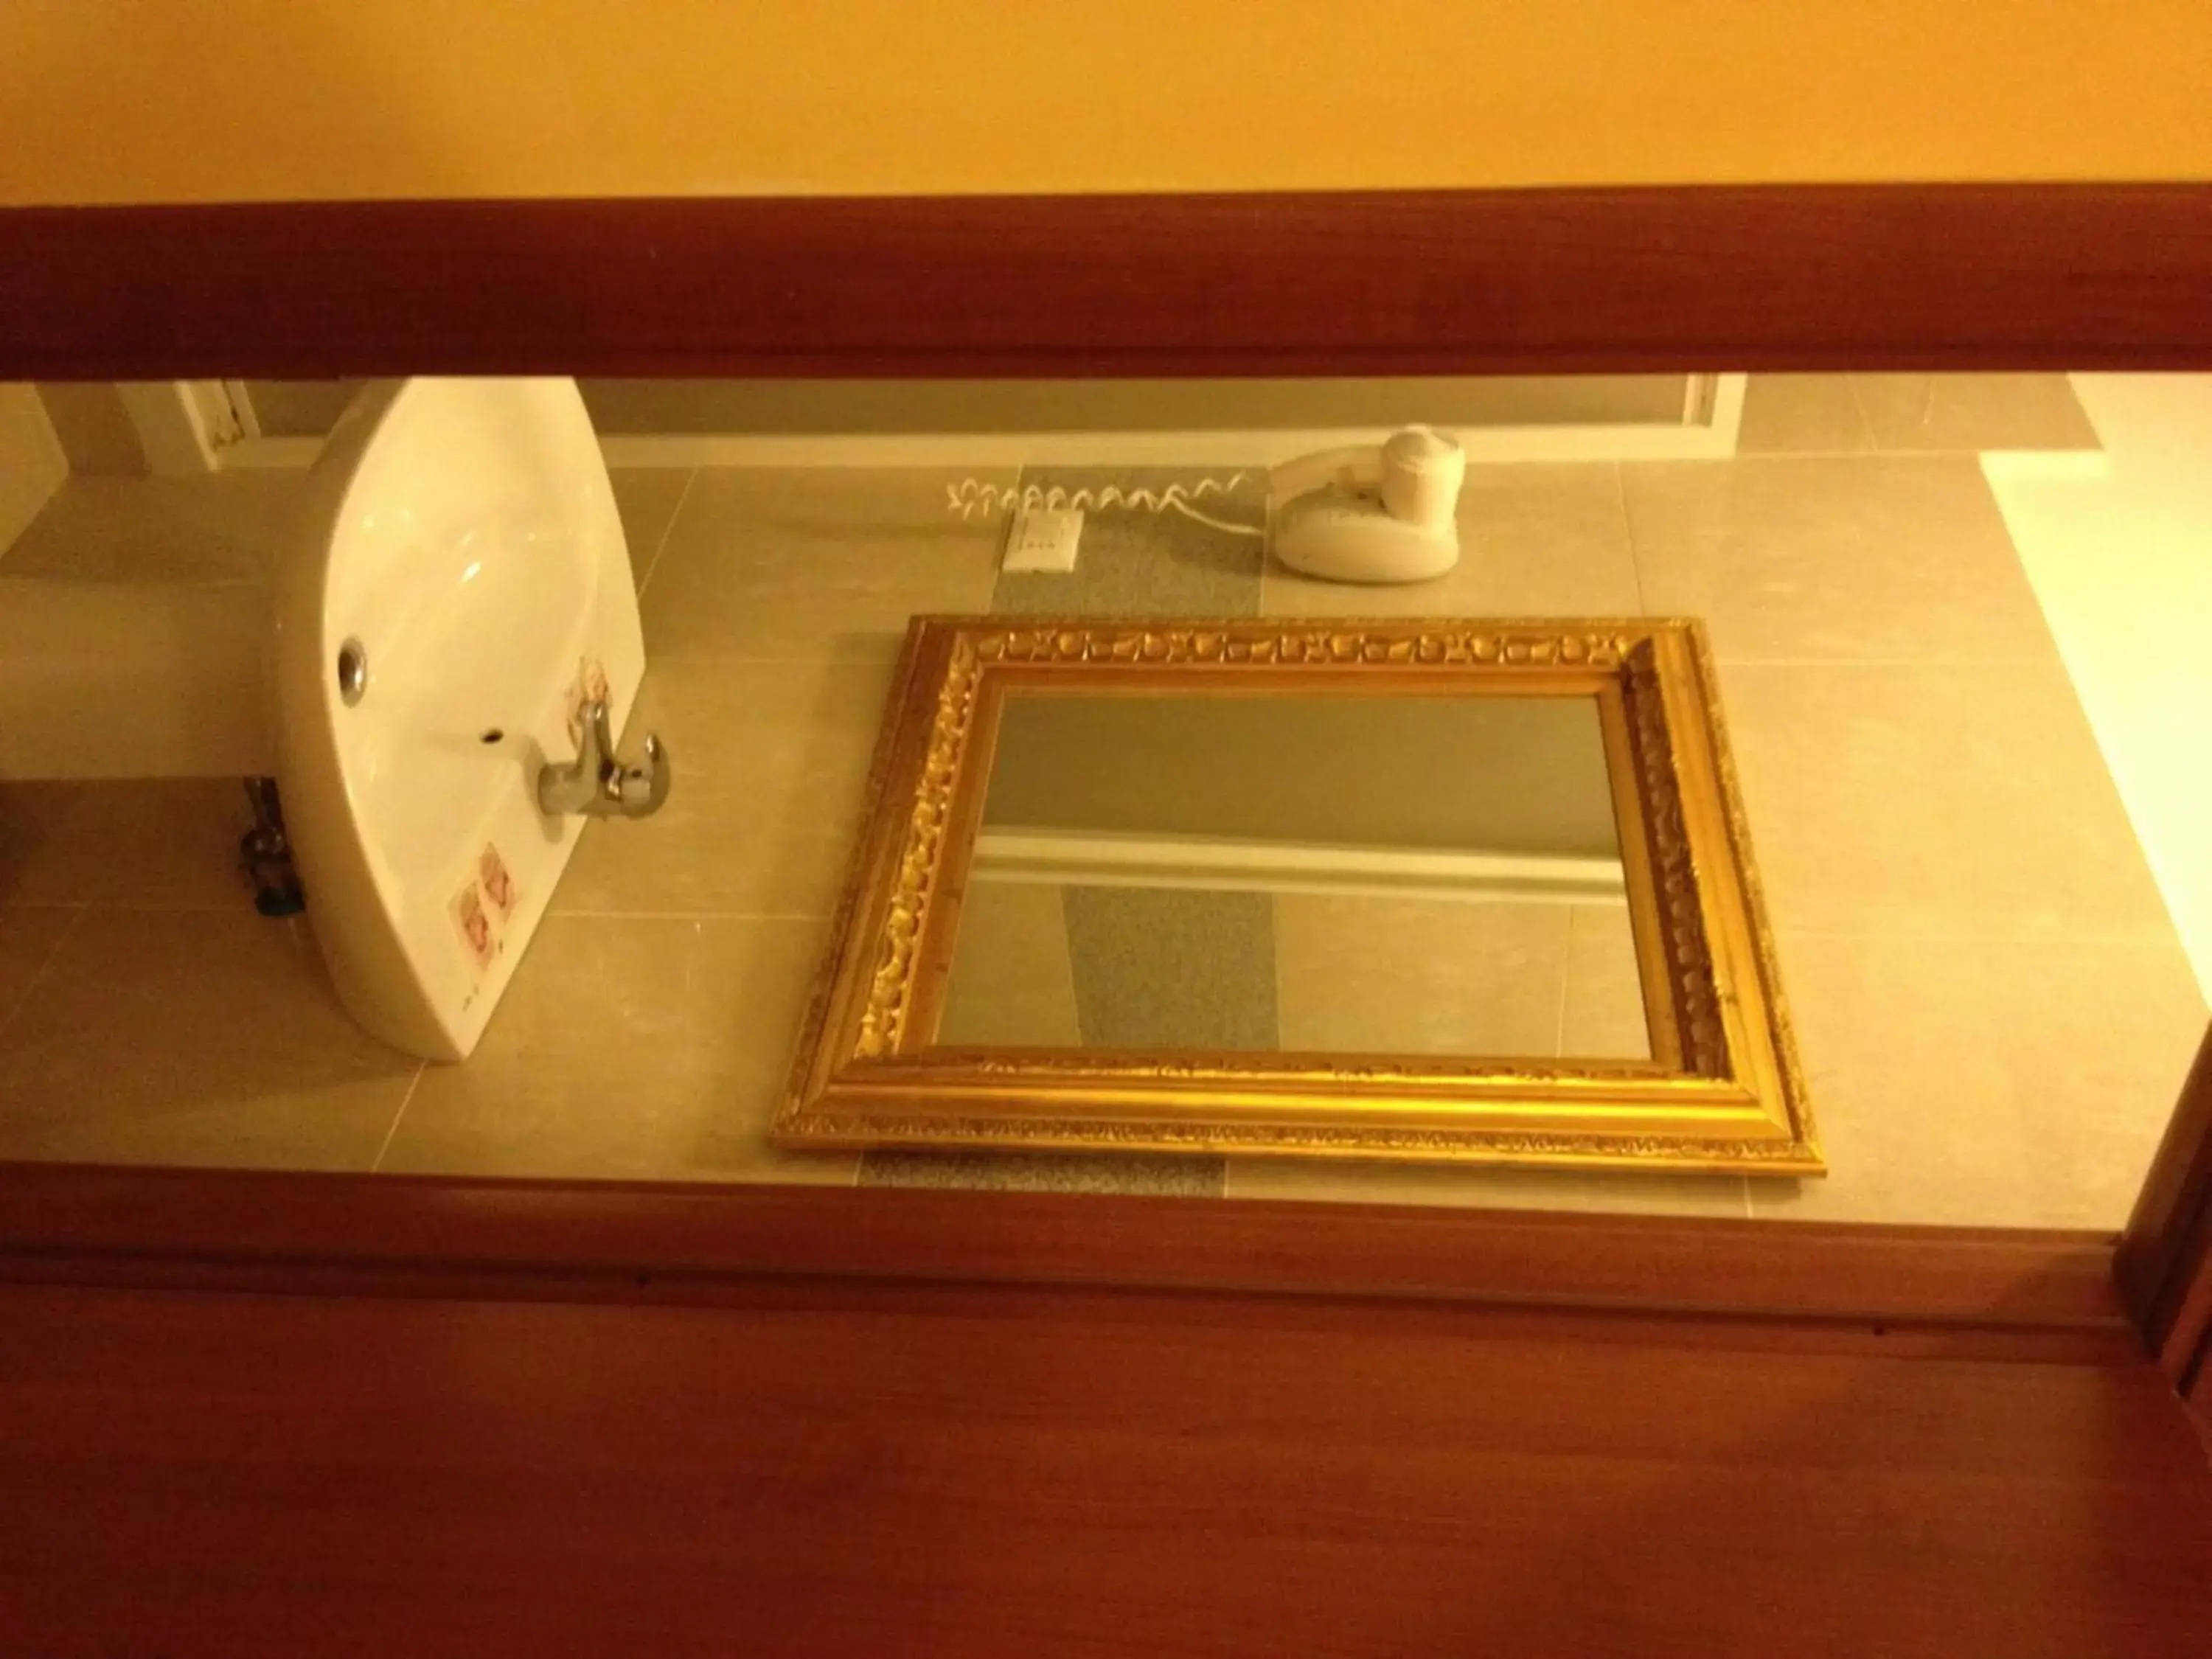 Bathroom in Hotel Termini